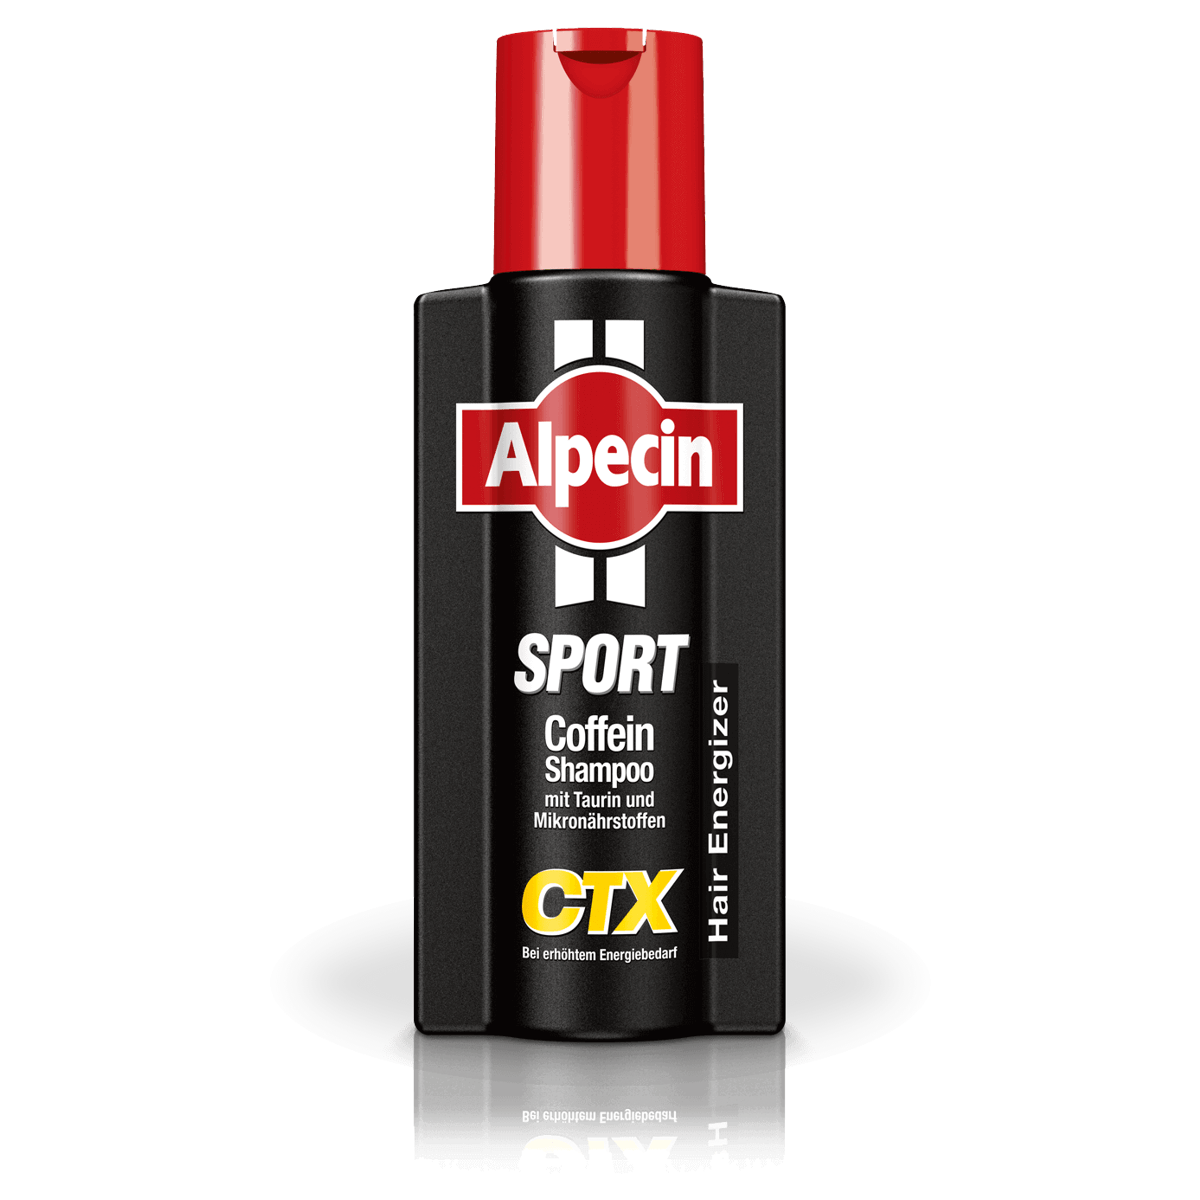 Alpecin Sport Coffein Shampoo CTX Flasche 250 ml